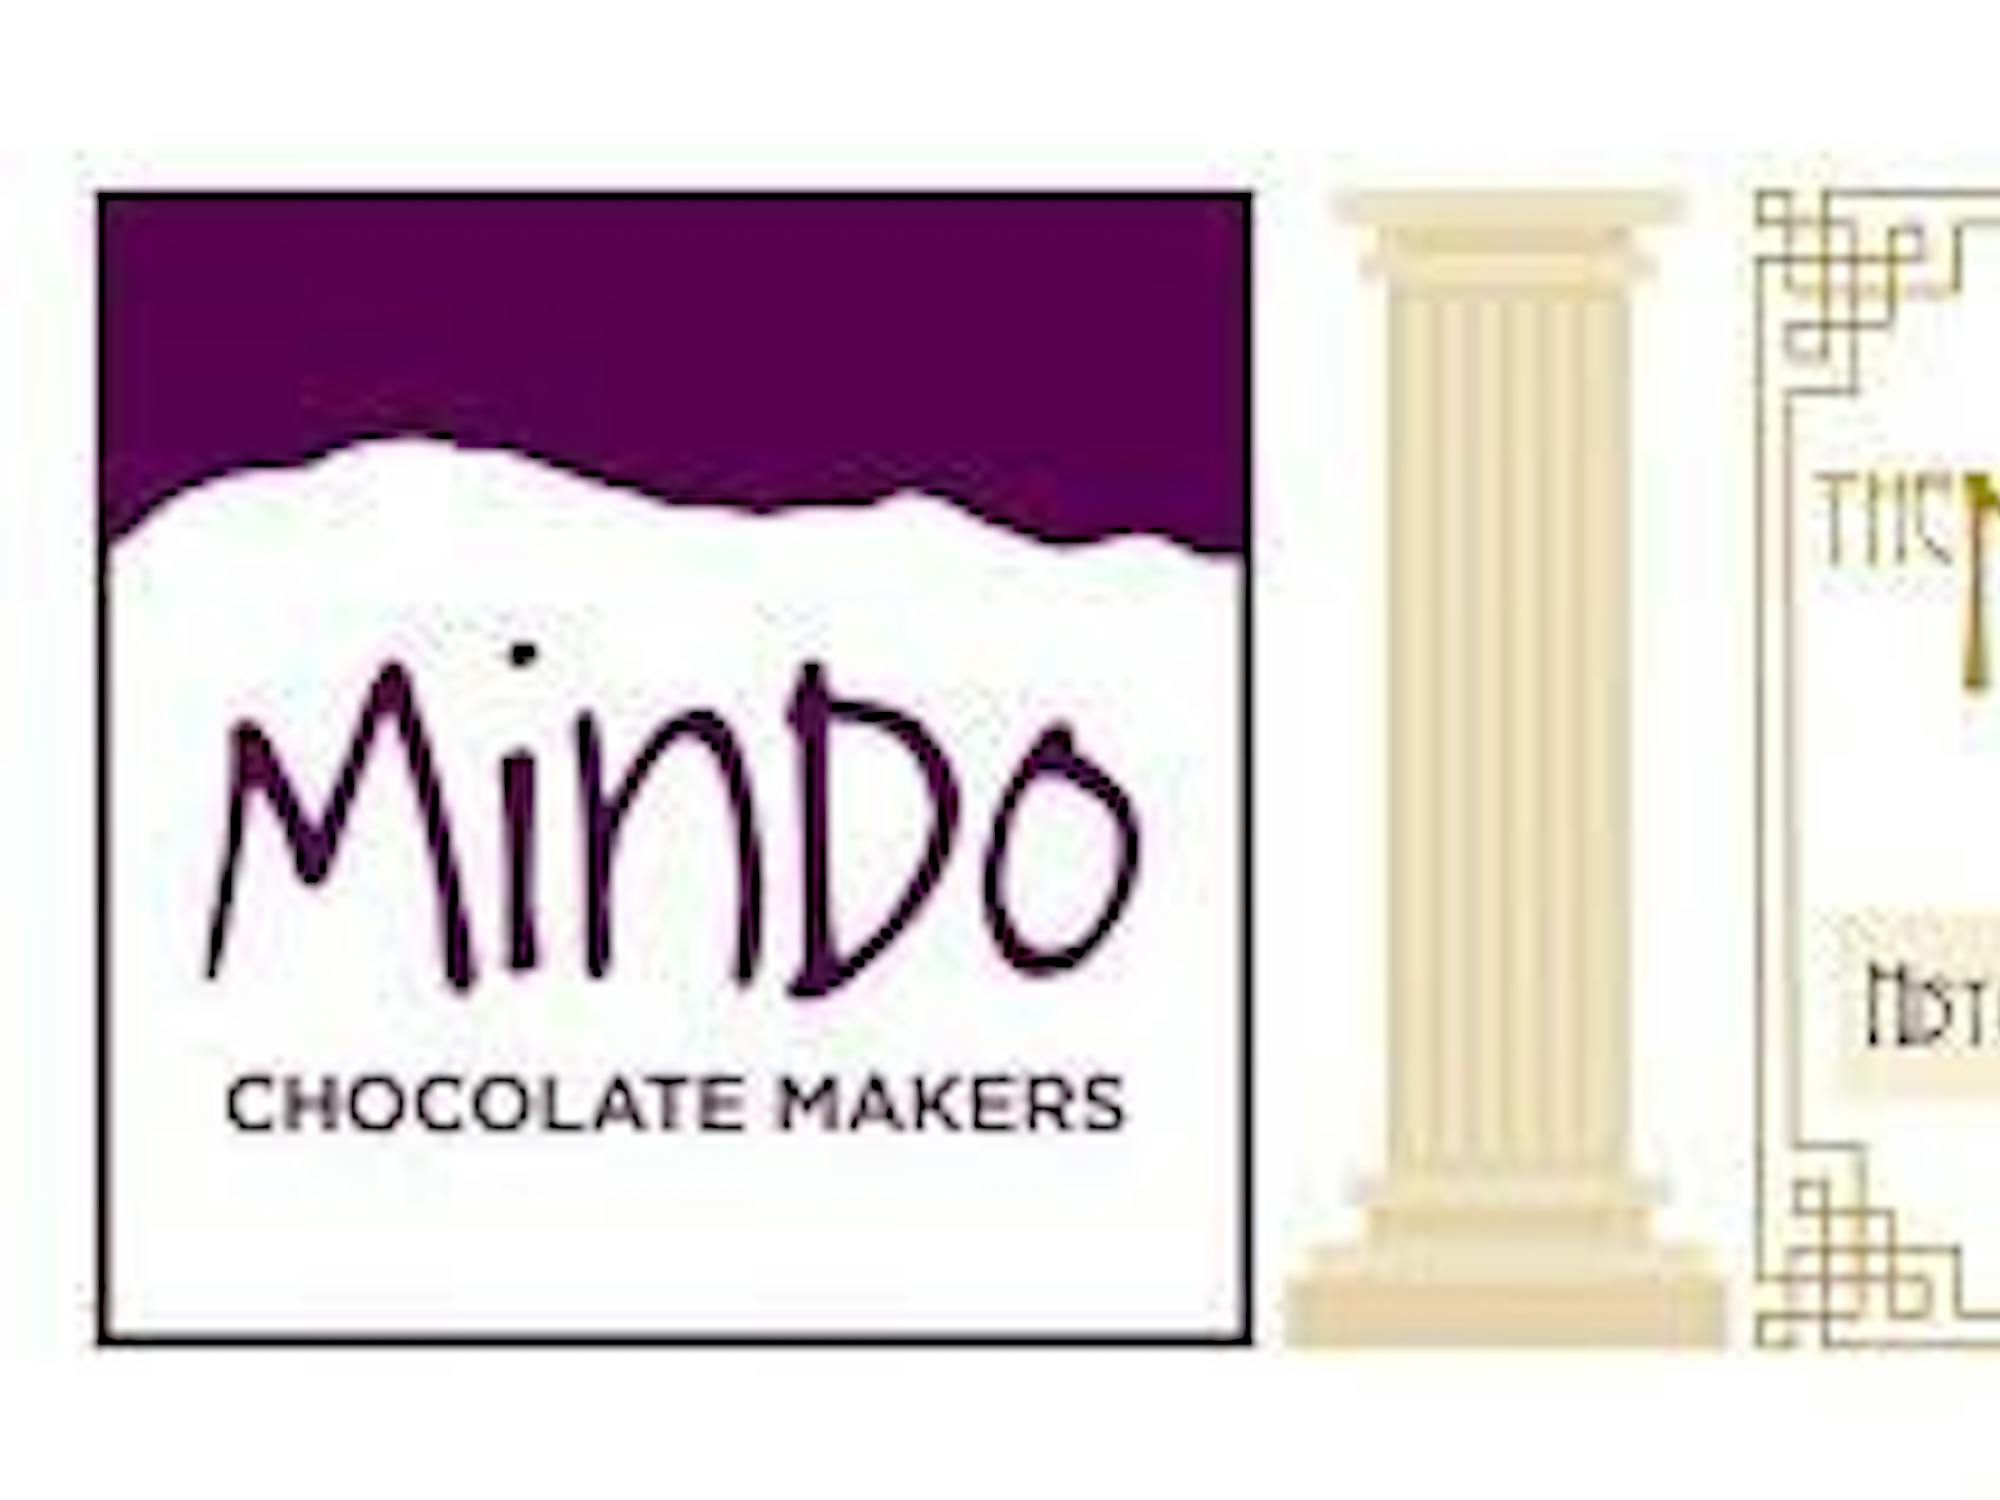 Mindo chocolate article pic.jpeg